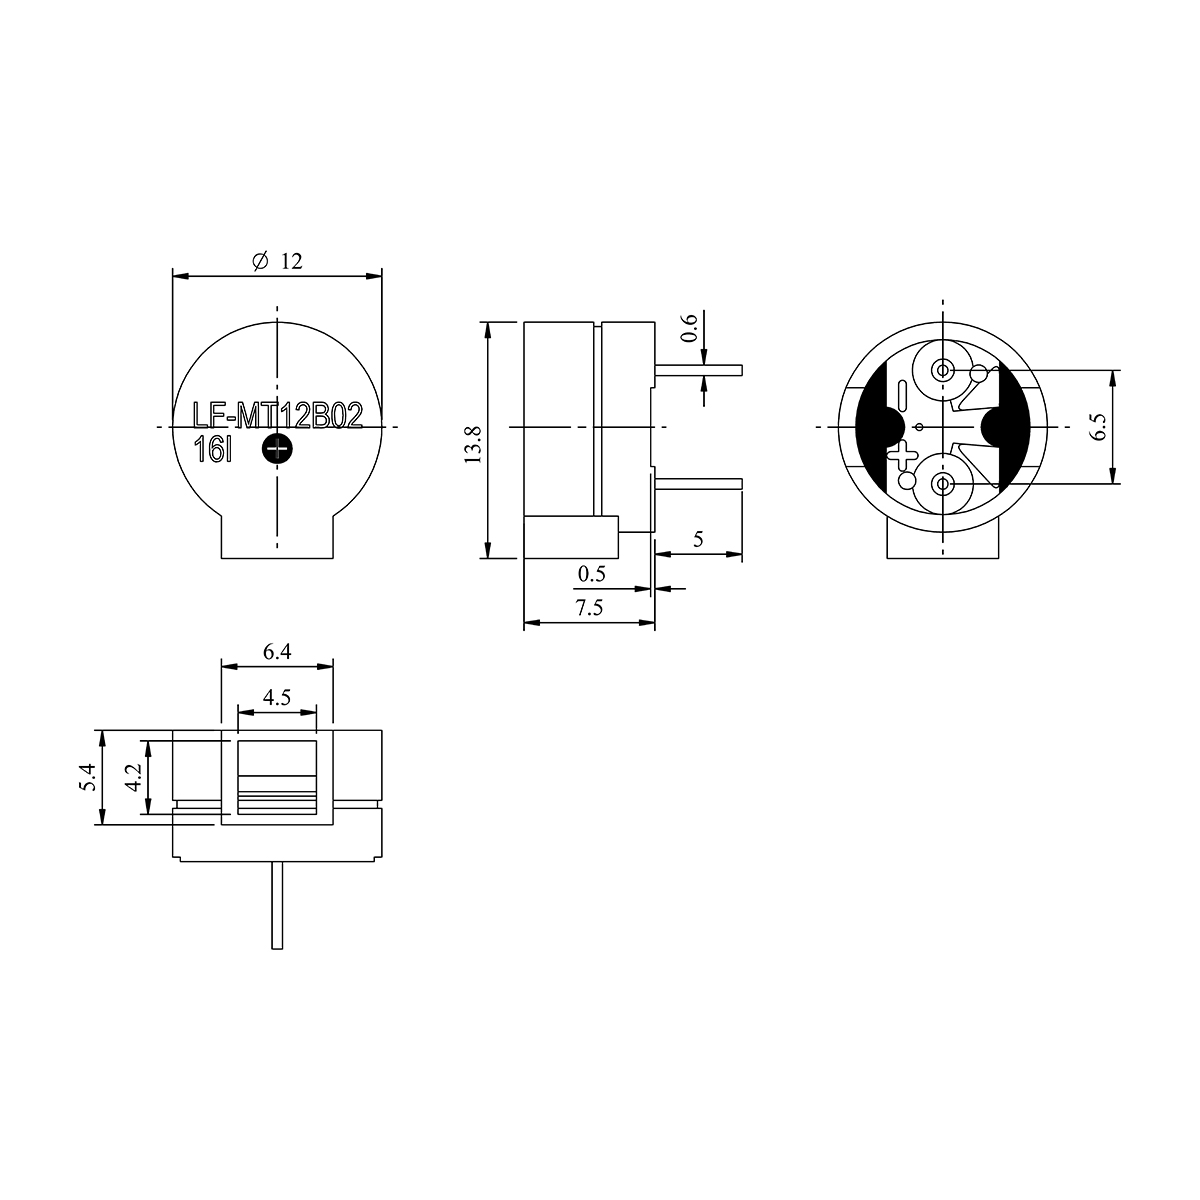 LF-MT12B02,Magnetic Transducer